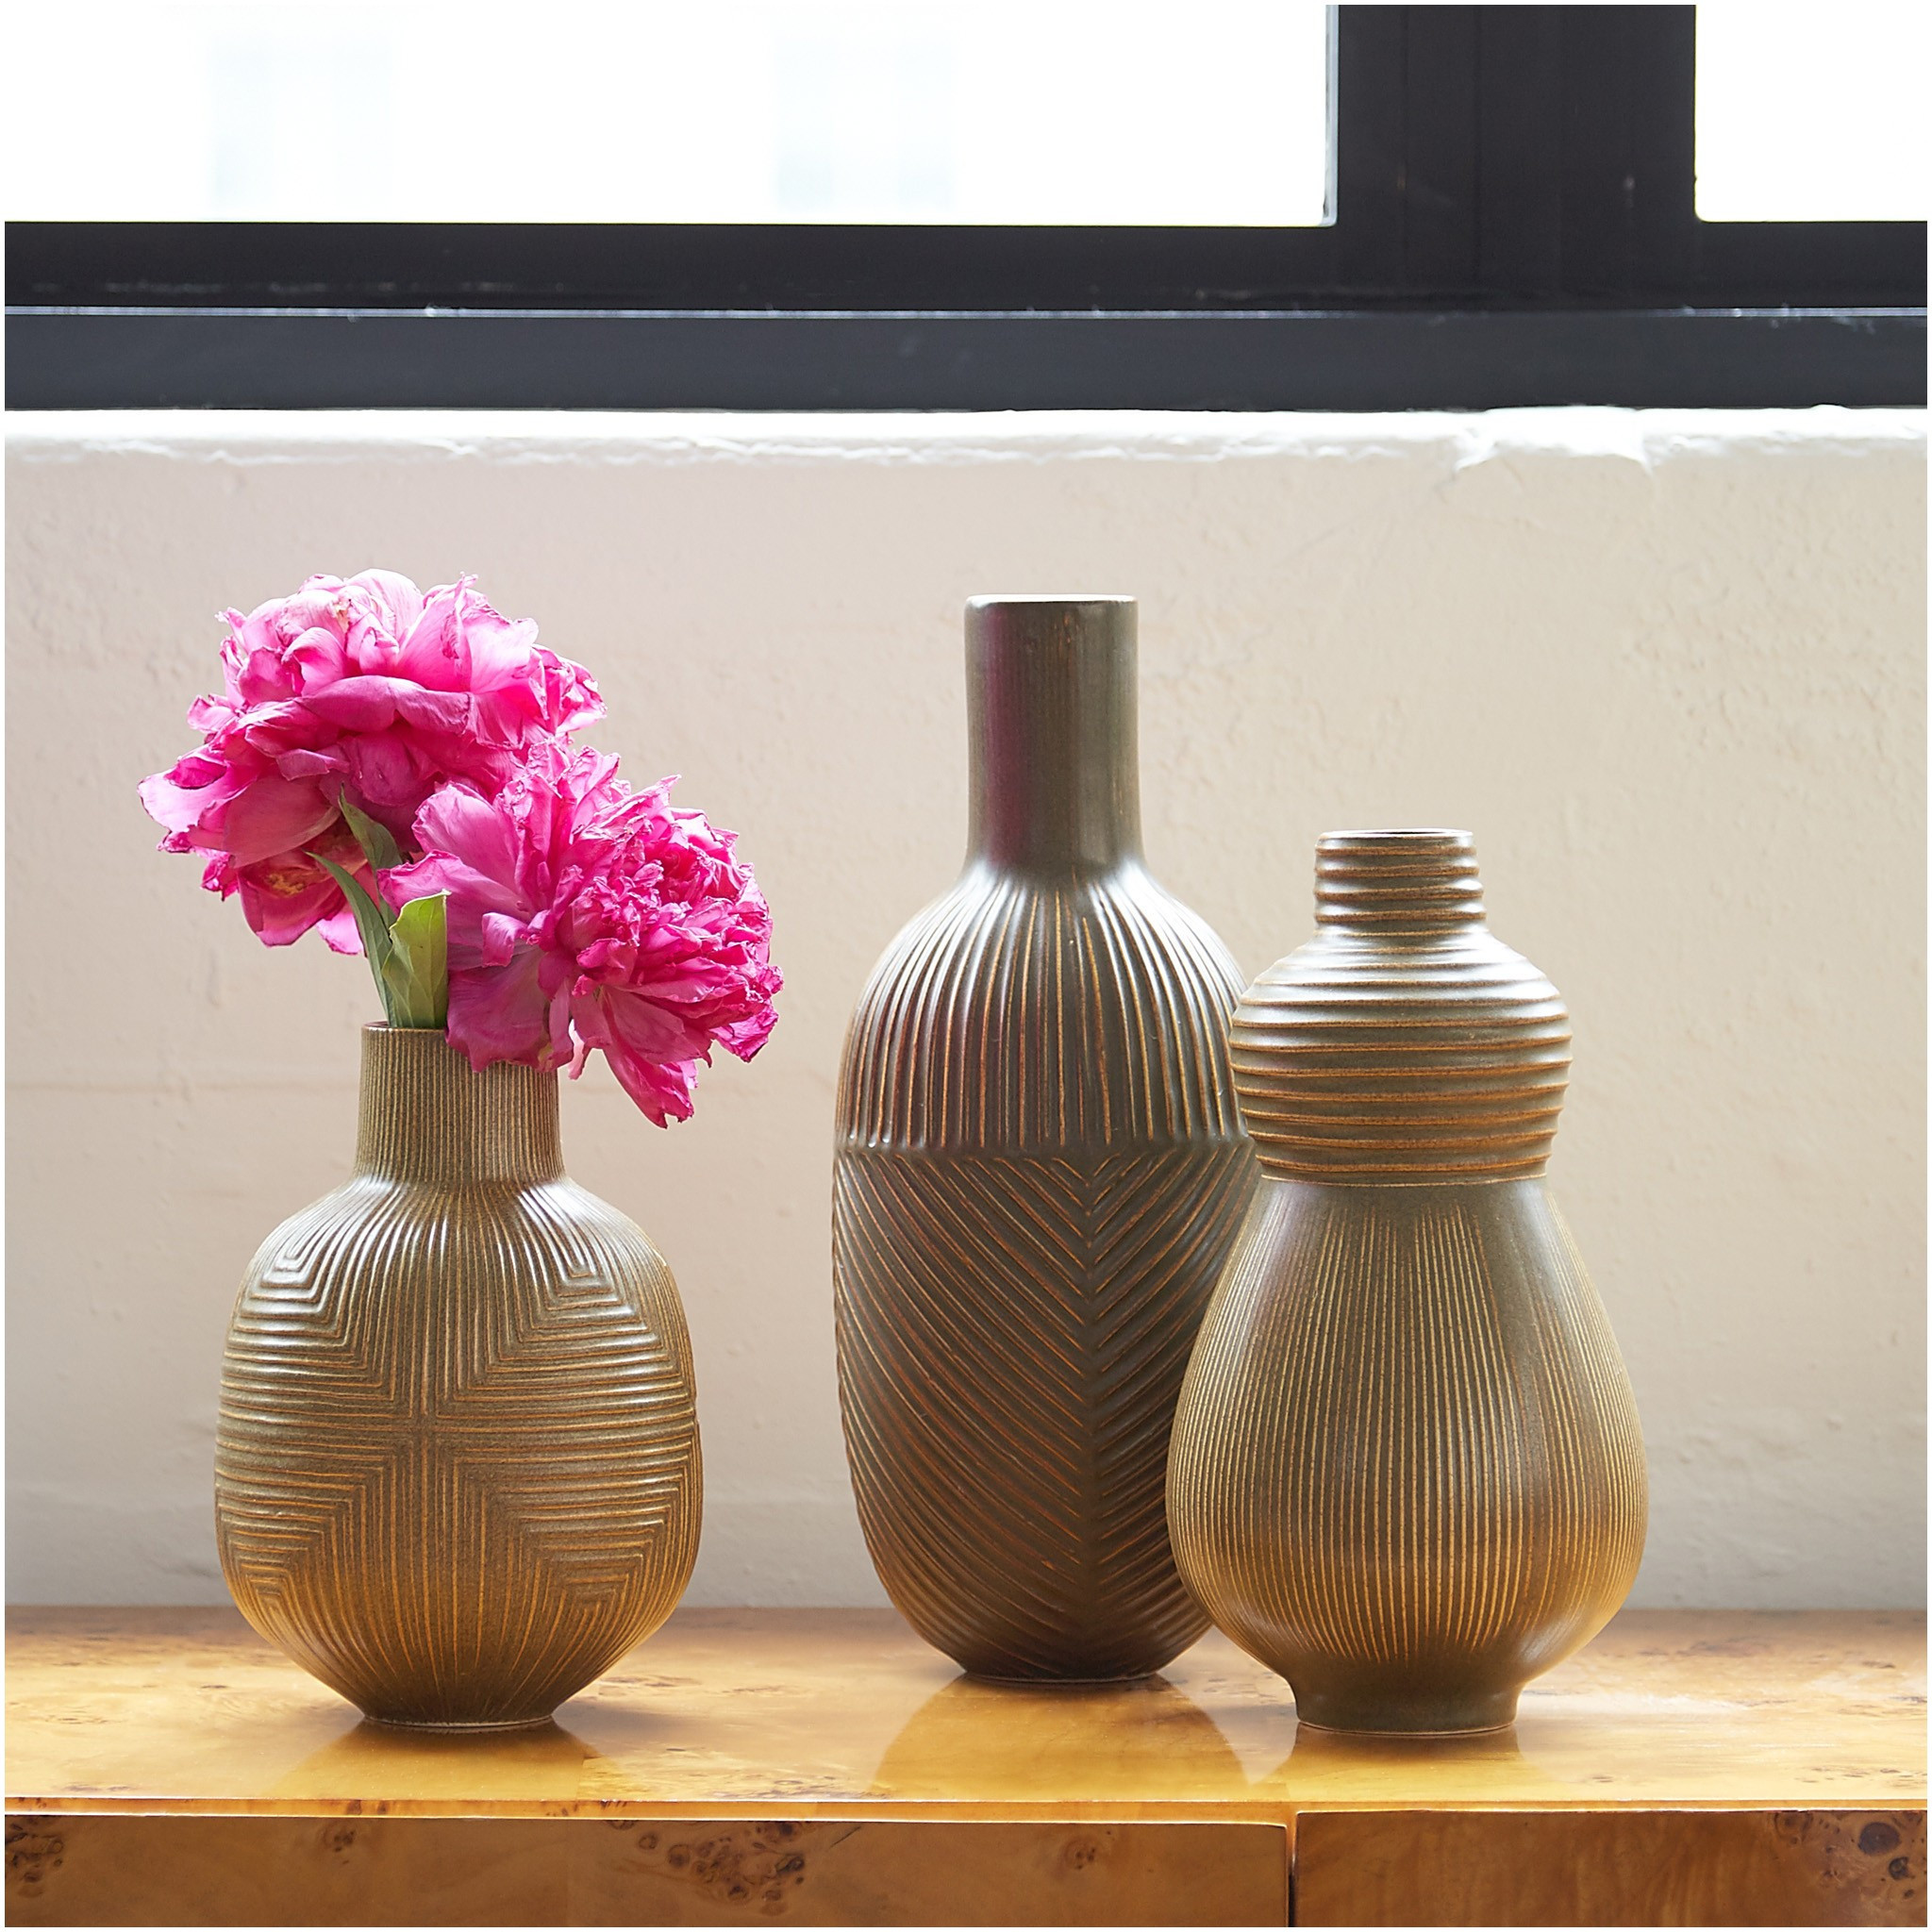 16 Wonderful Purple Ceramic Vase 2024 free download purple ceramic vase of 21 beau decorative vases anciendemutu org regarding modern decor pottery relief vases 2015 styled b jonathan adlerh i 18d